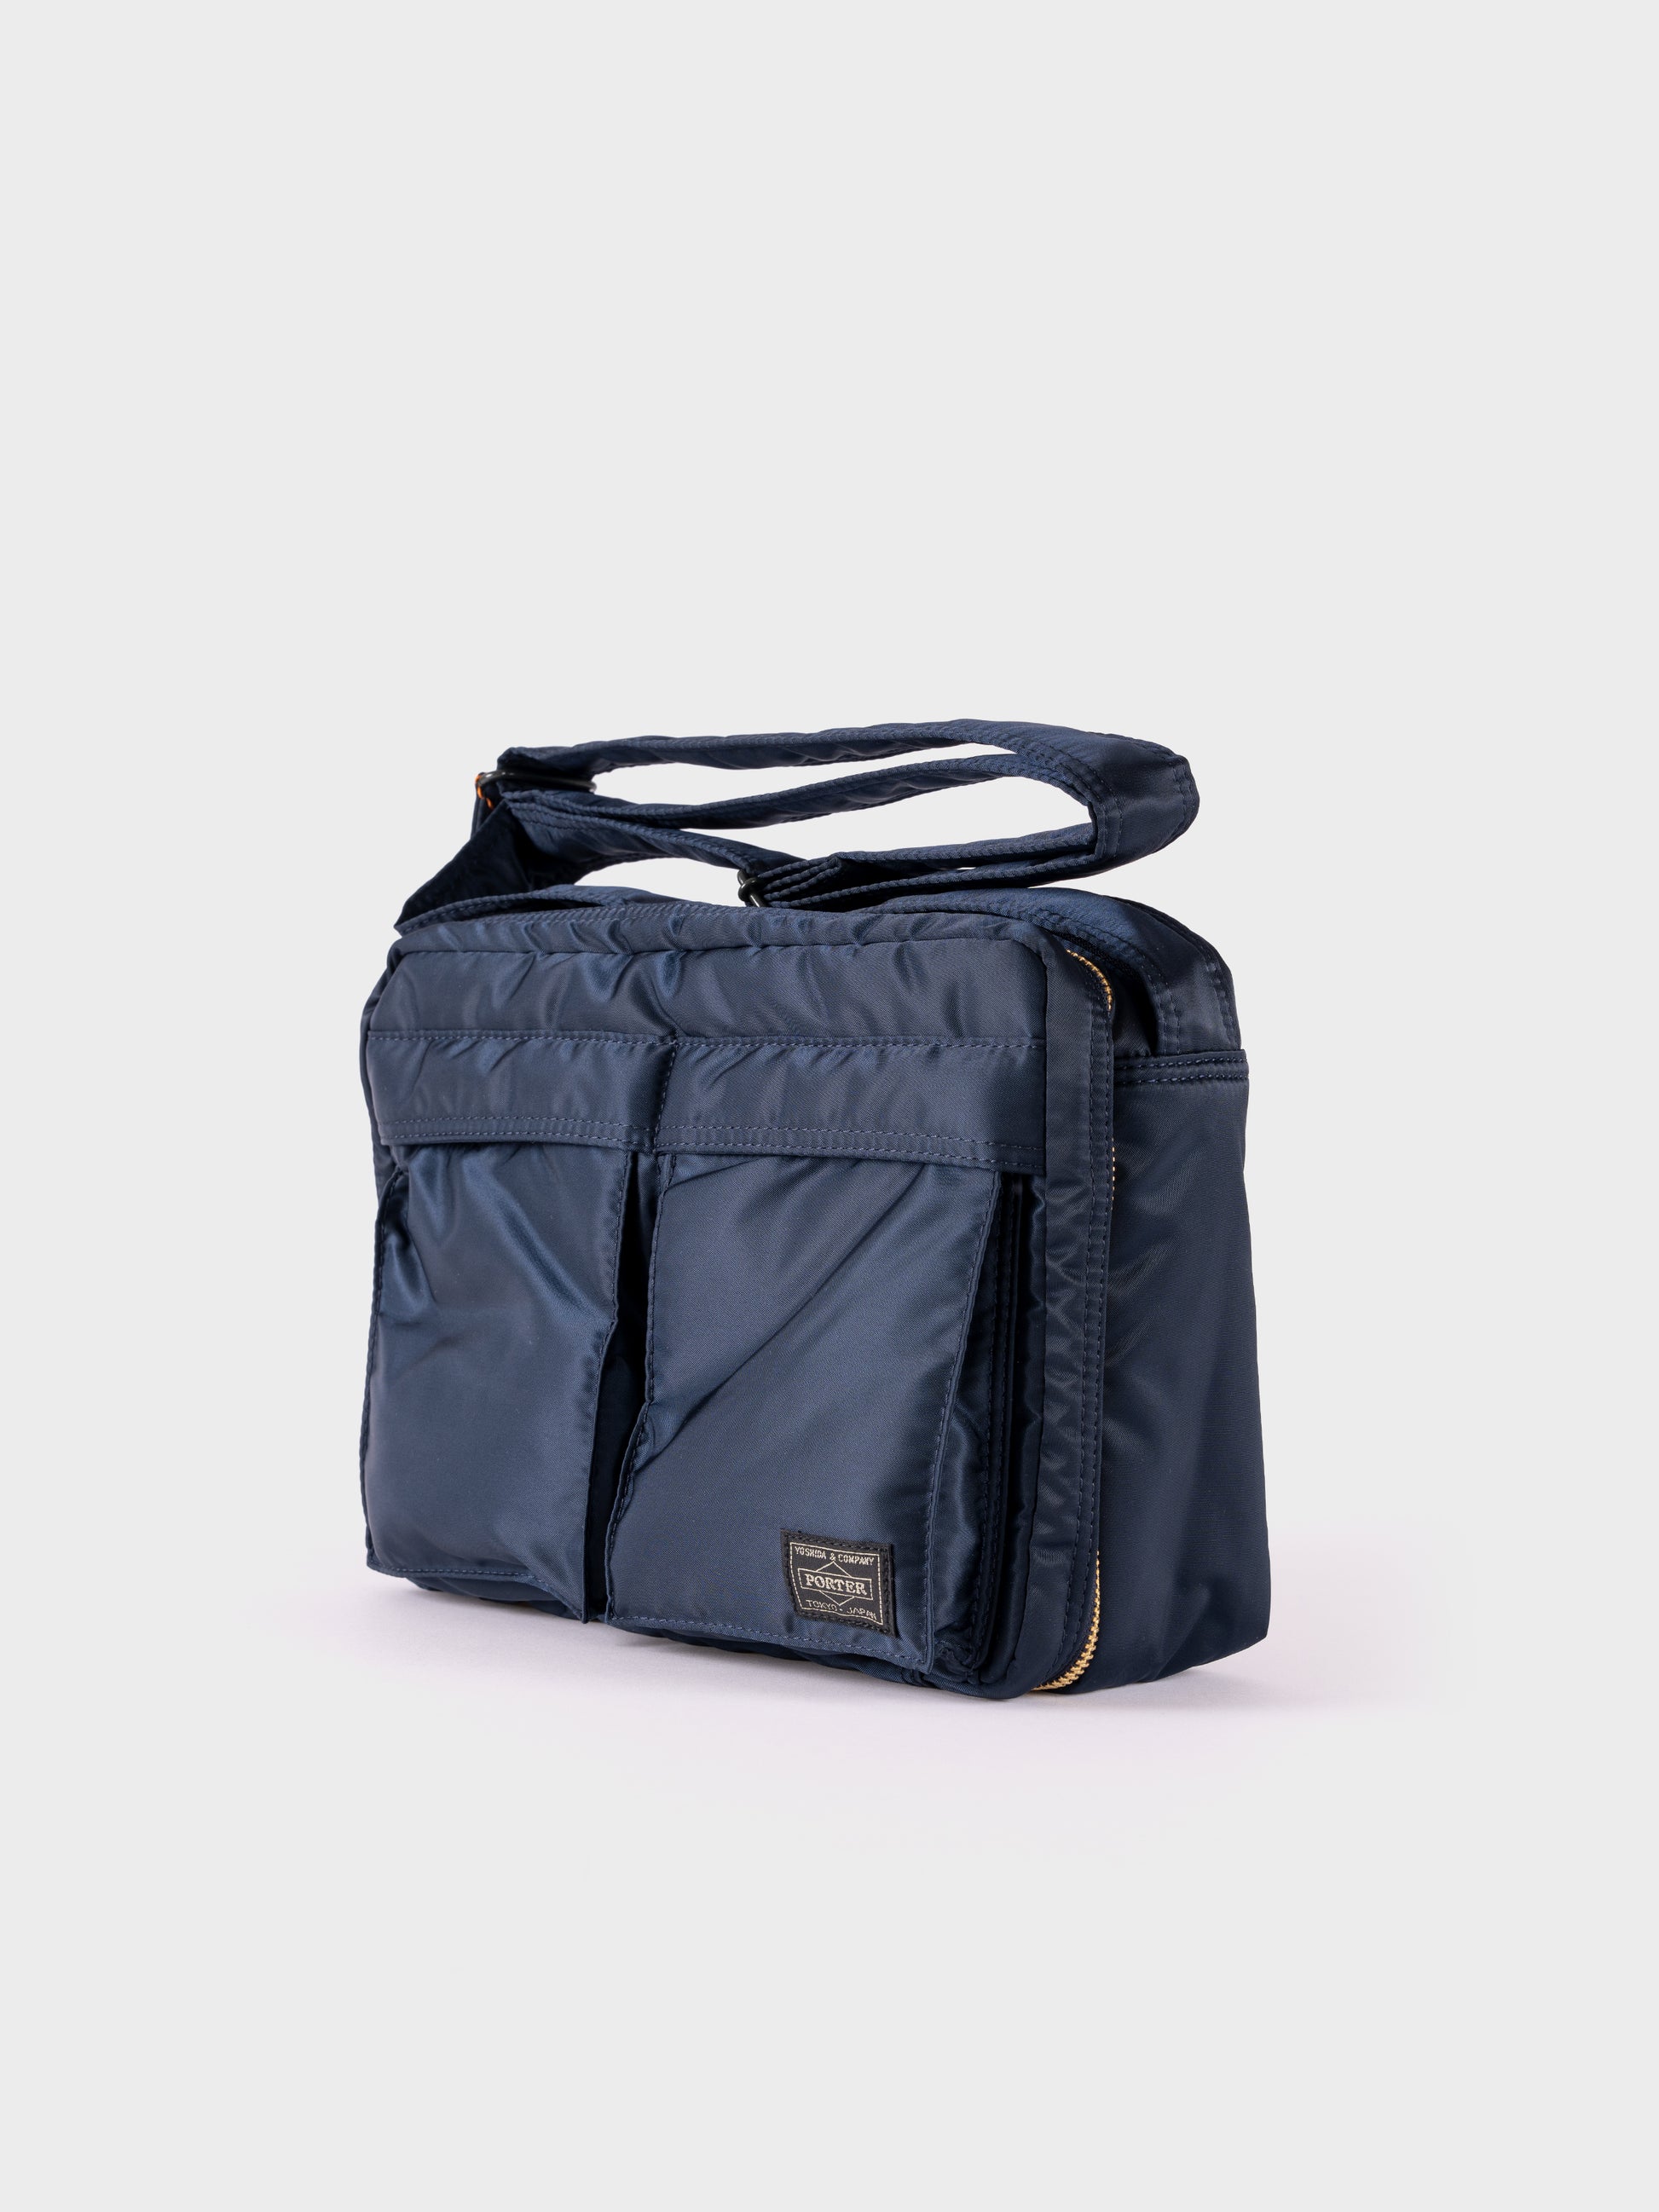 Porter-Yoshida & Co Tanker Shoulder Bag L - Iron Blue